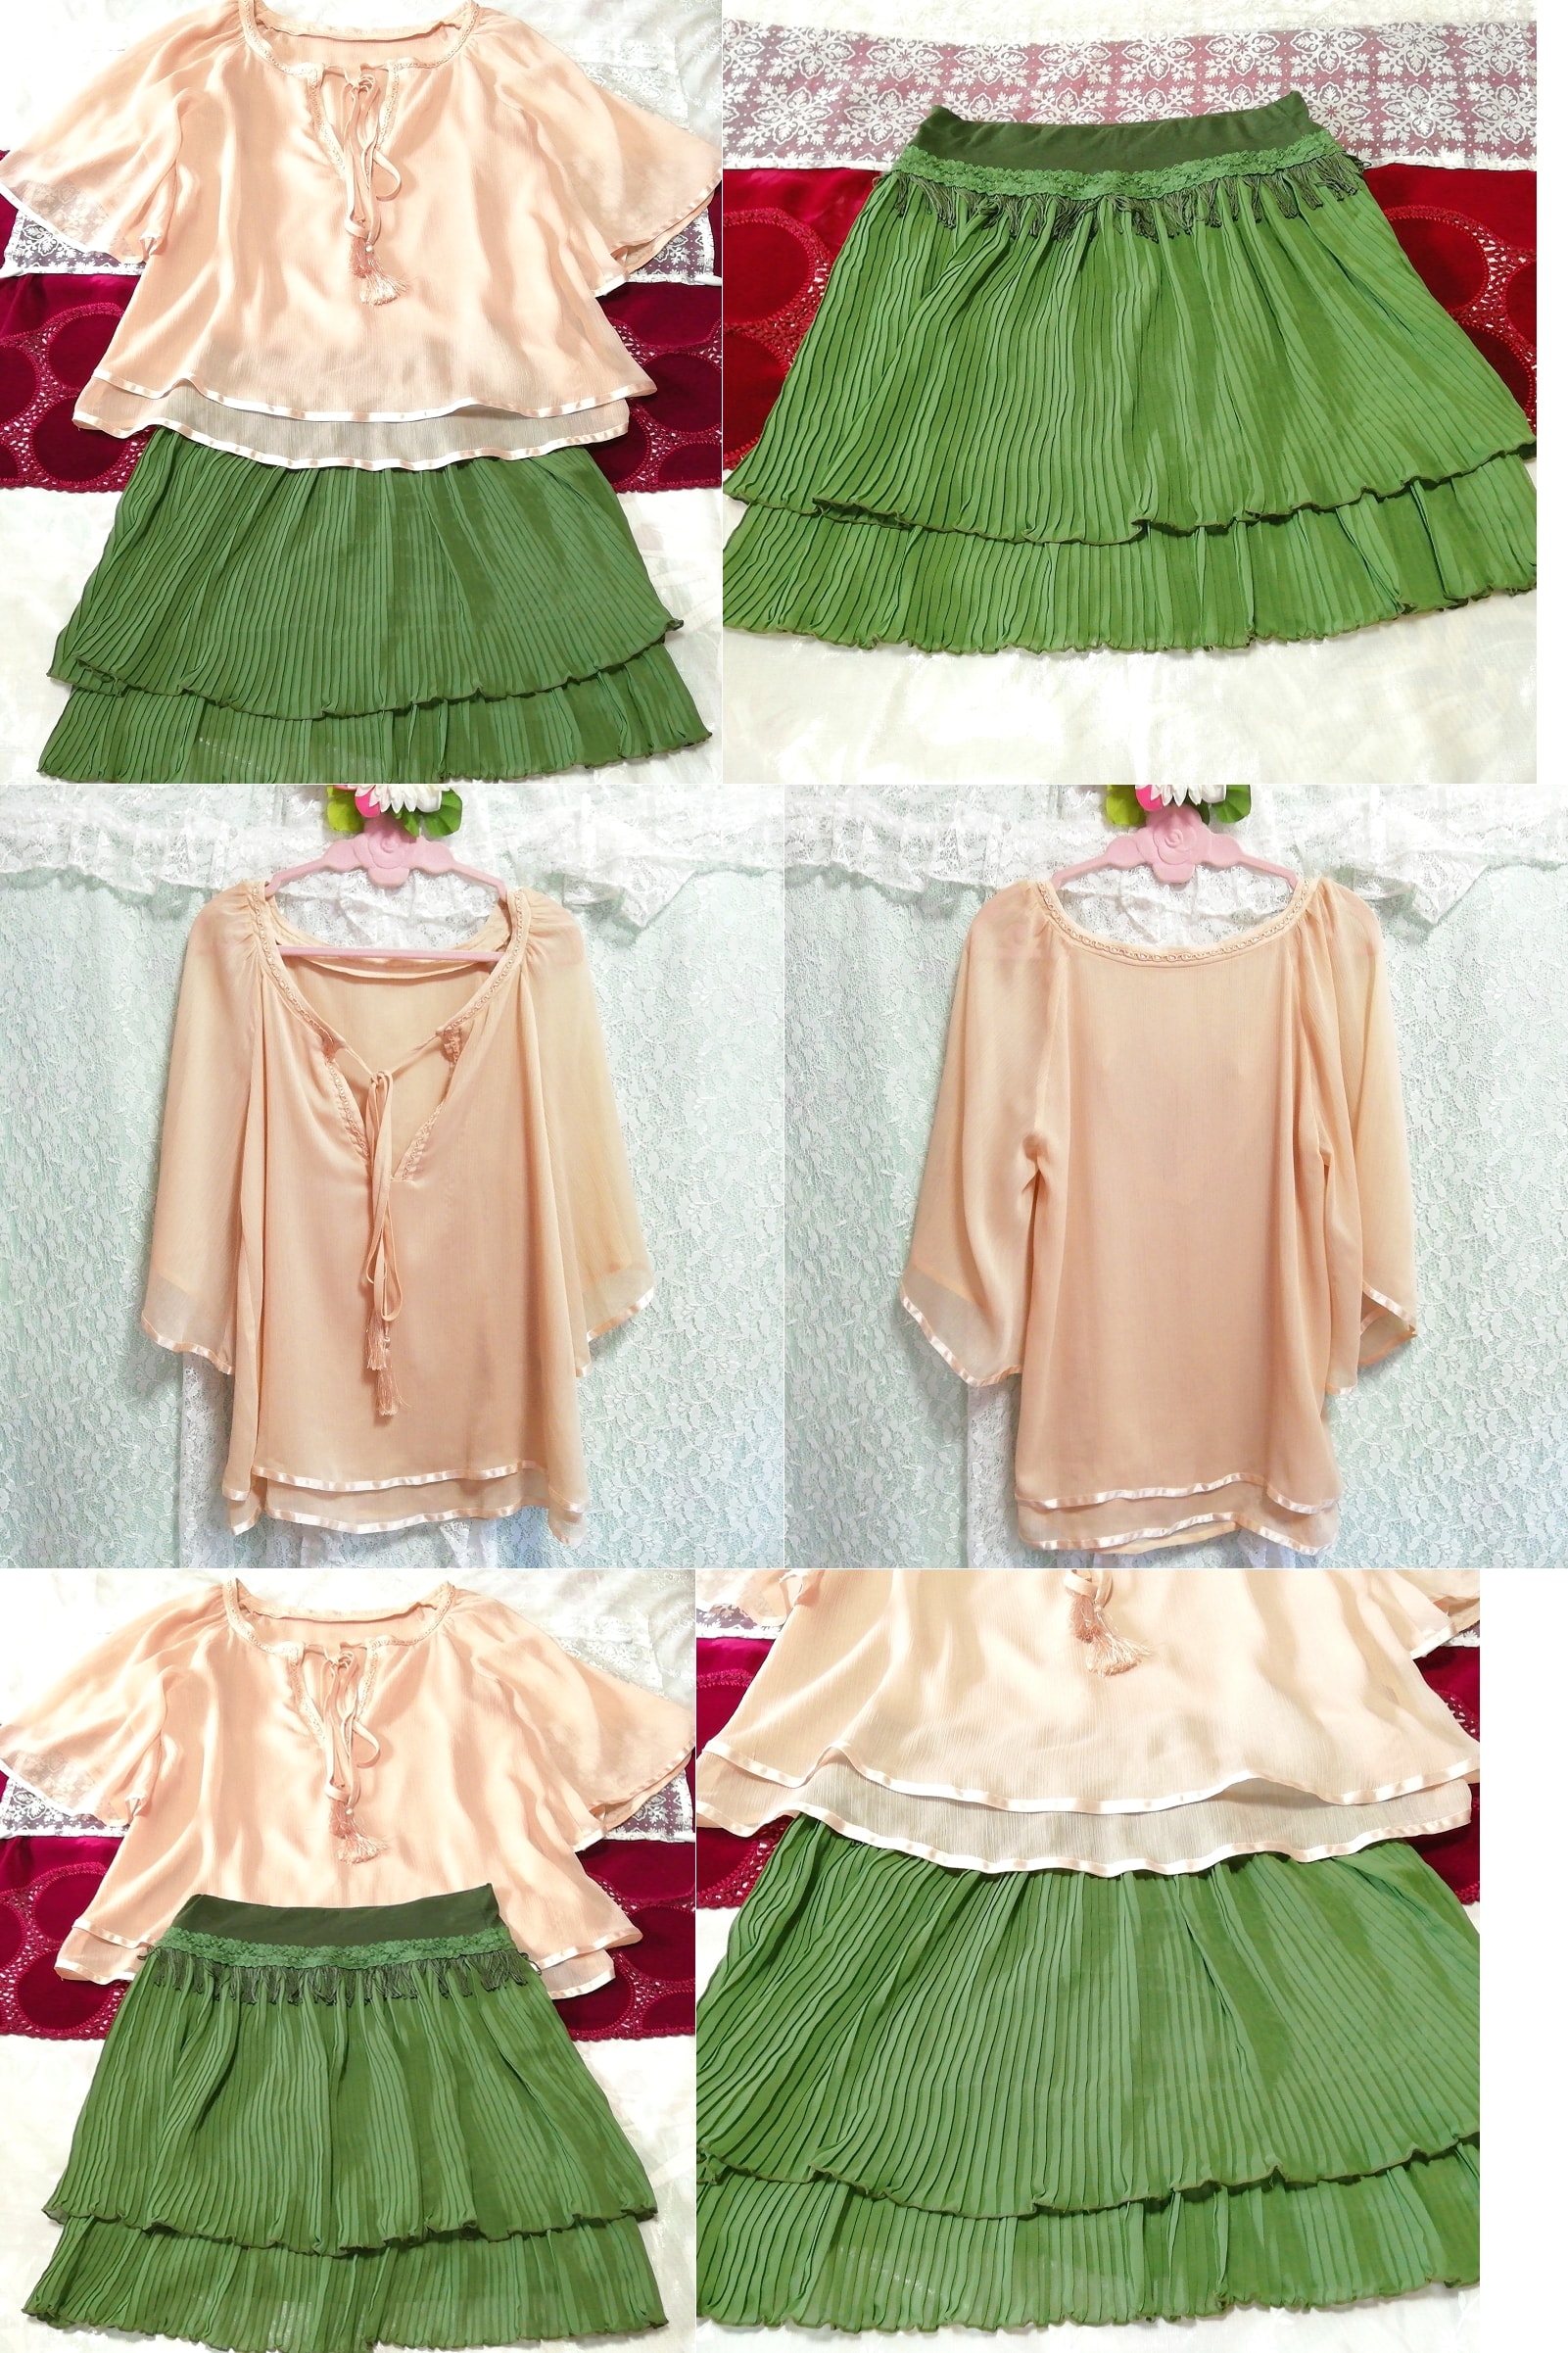 Rosa-beiges Chiffon-Tunika-Negligé-Nachthemd, grüner Falten-Minirock, 2 Stück, Mode, Frauenmode, Nachtwäsche, Pyjama